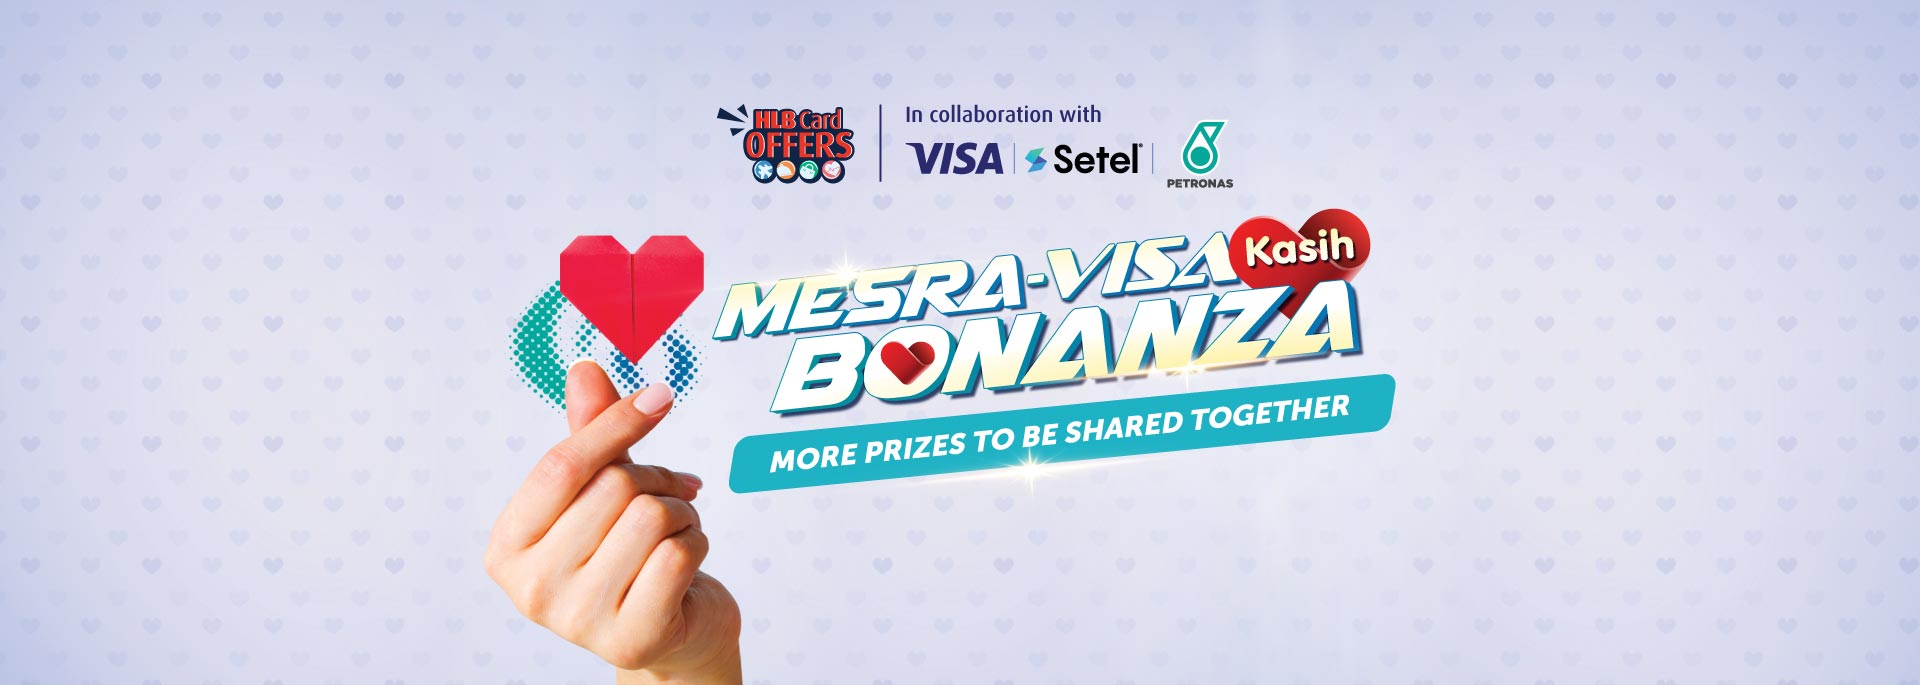 Cards Mesra-Visa Kasih Bonanza campaign